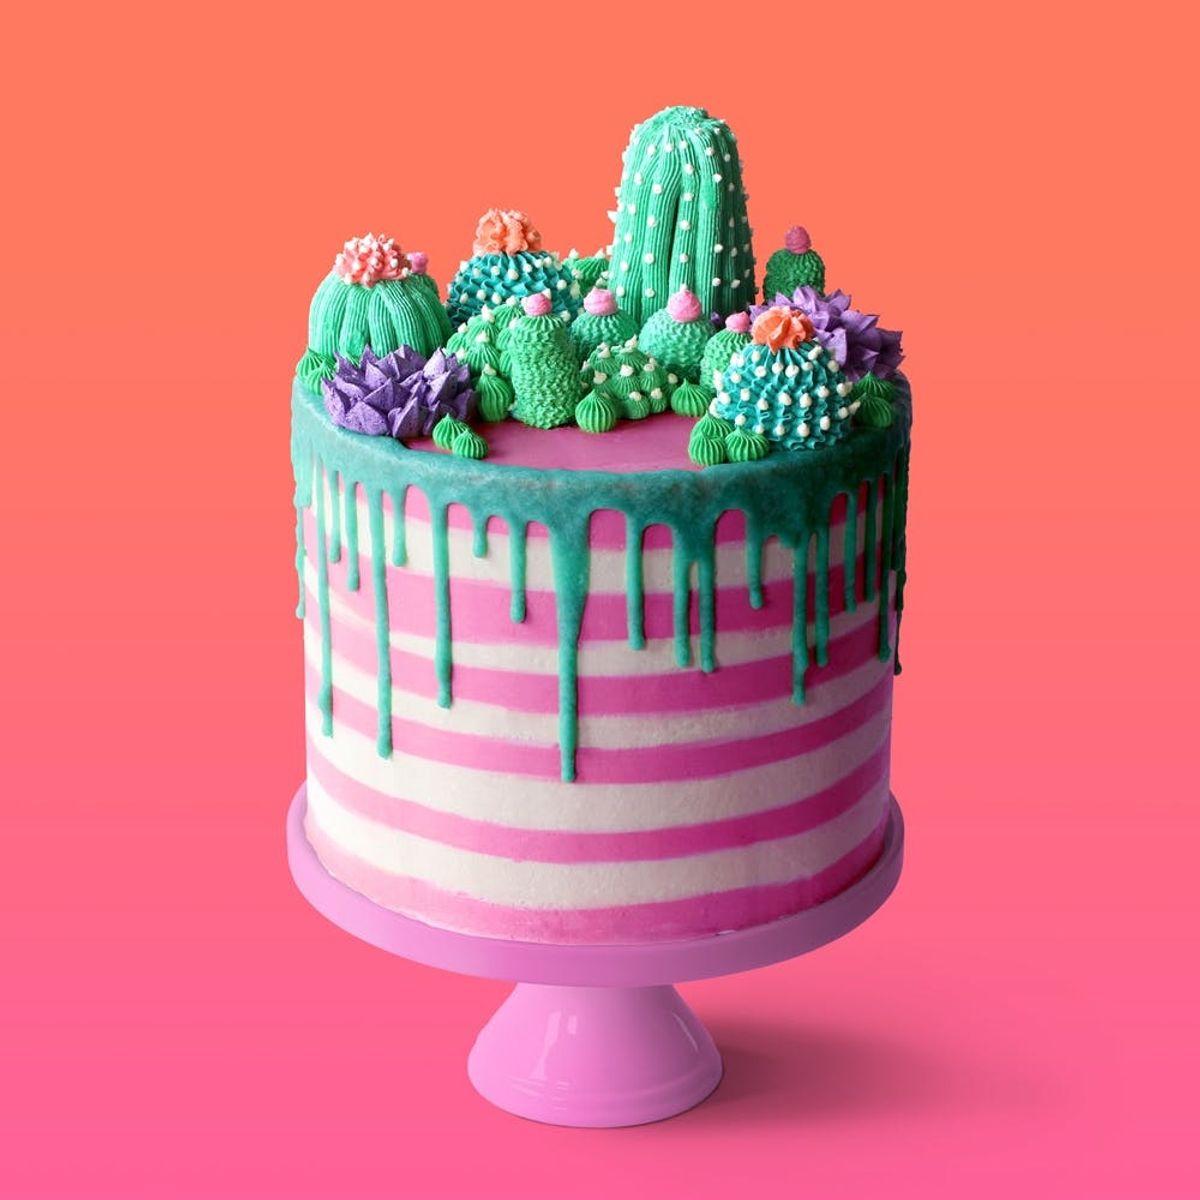 Who Needs a Succulent Garden When You Can Make This Sweet Cactus Cake?